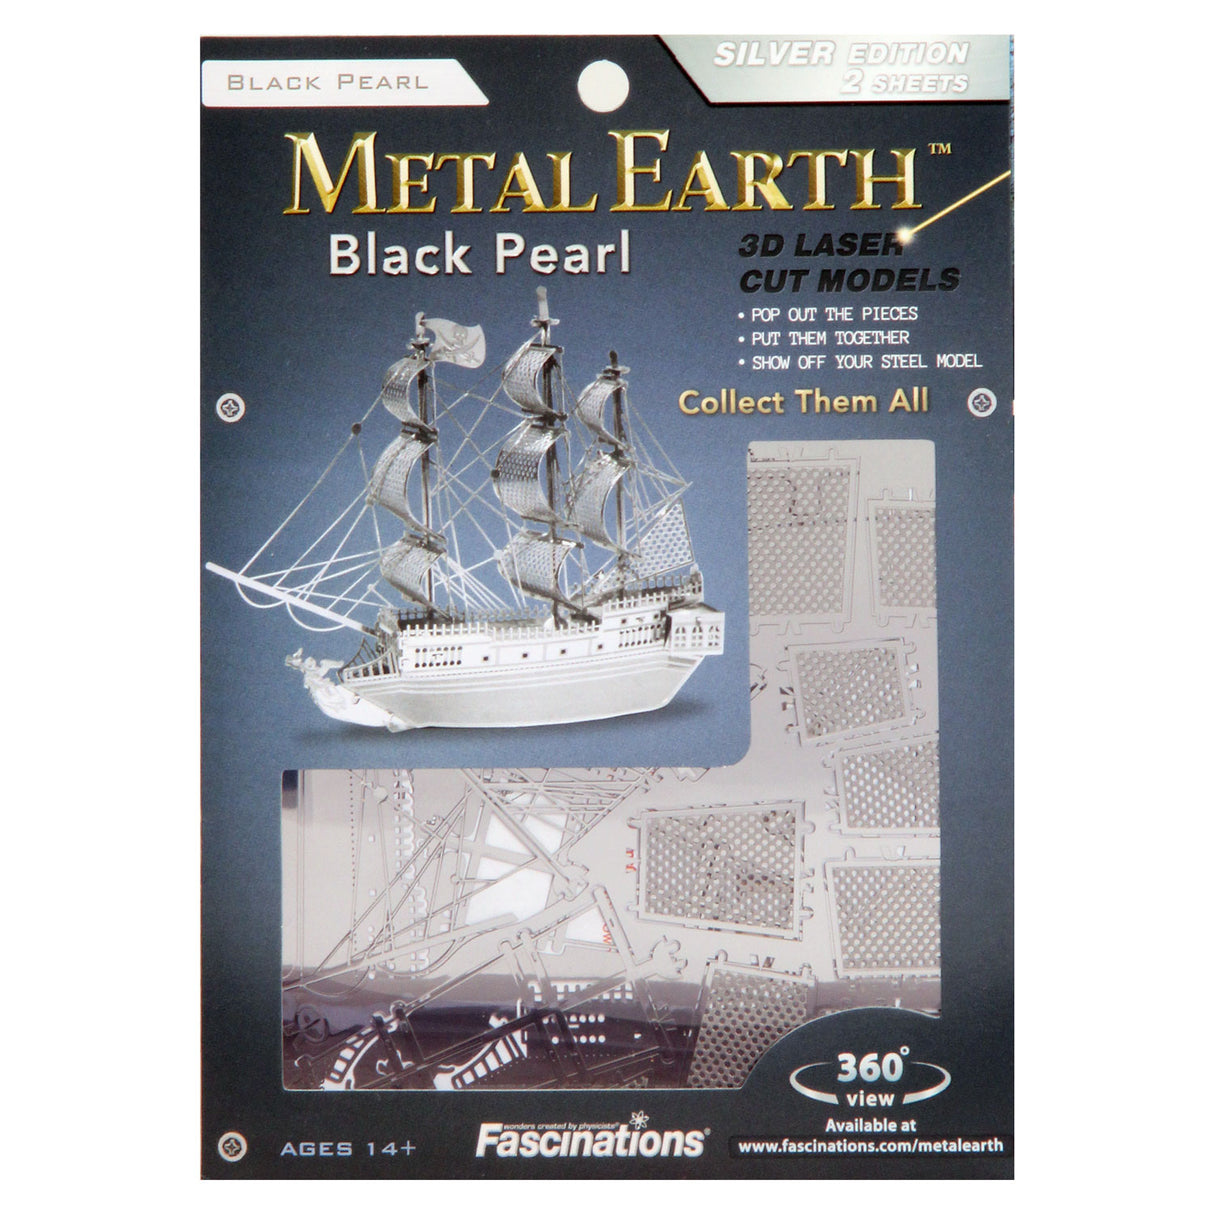 Eureka Metal Earth Pirate Ship Black Pearl Zilver Editie